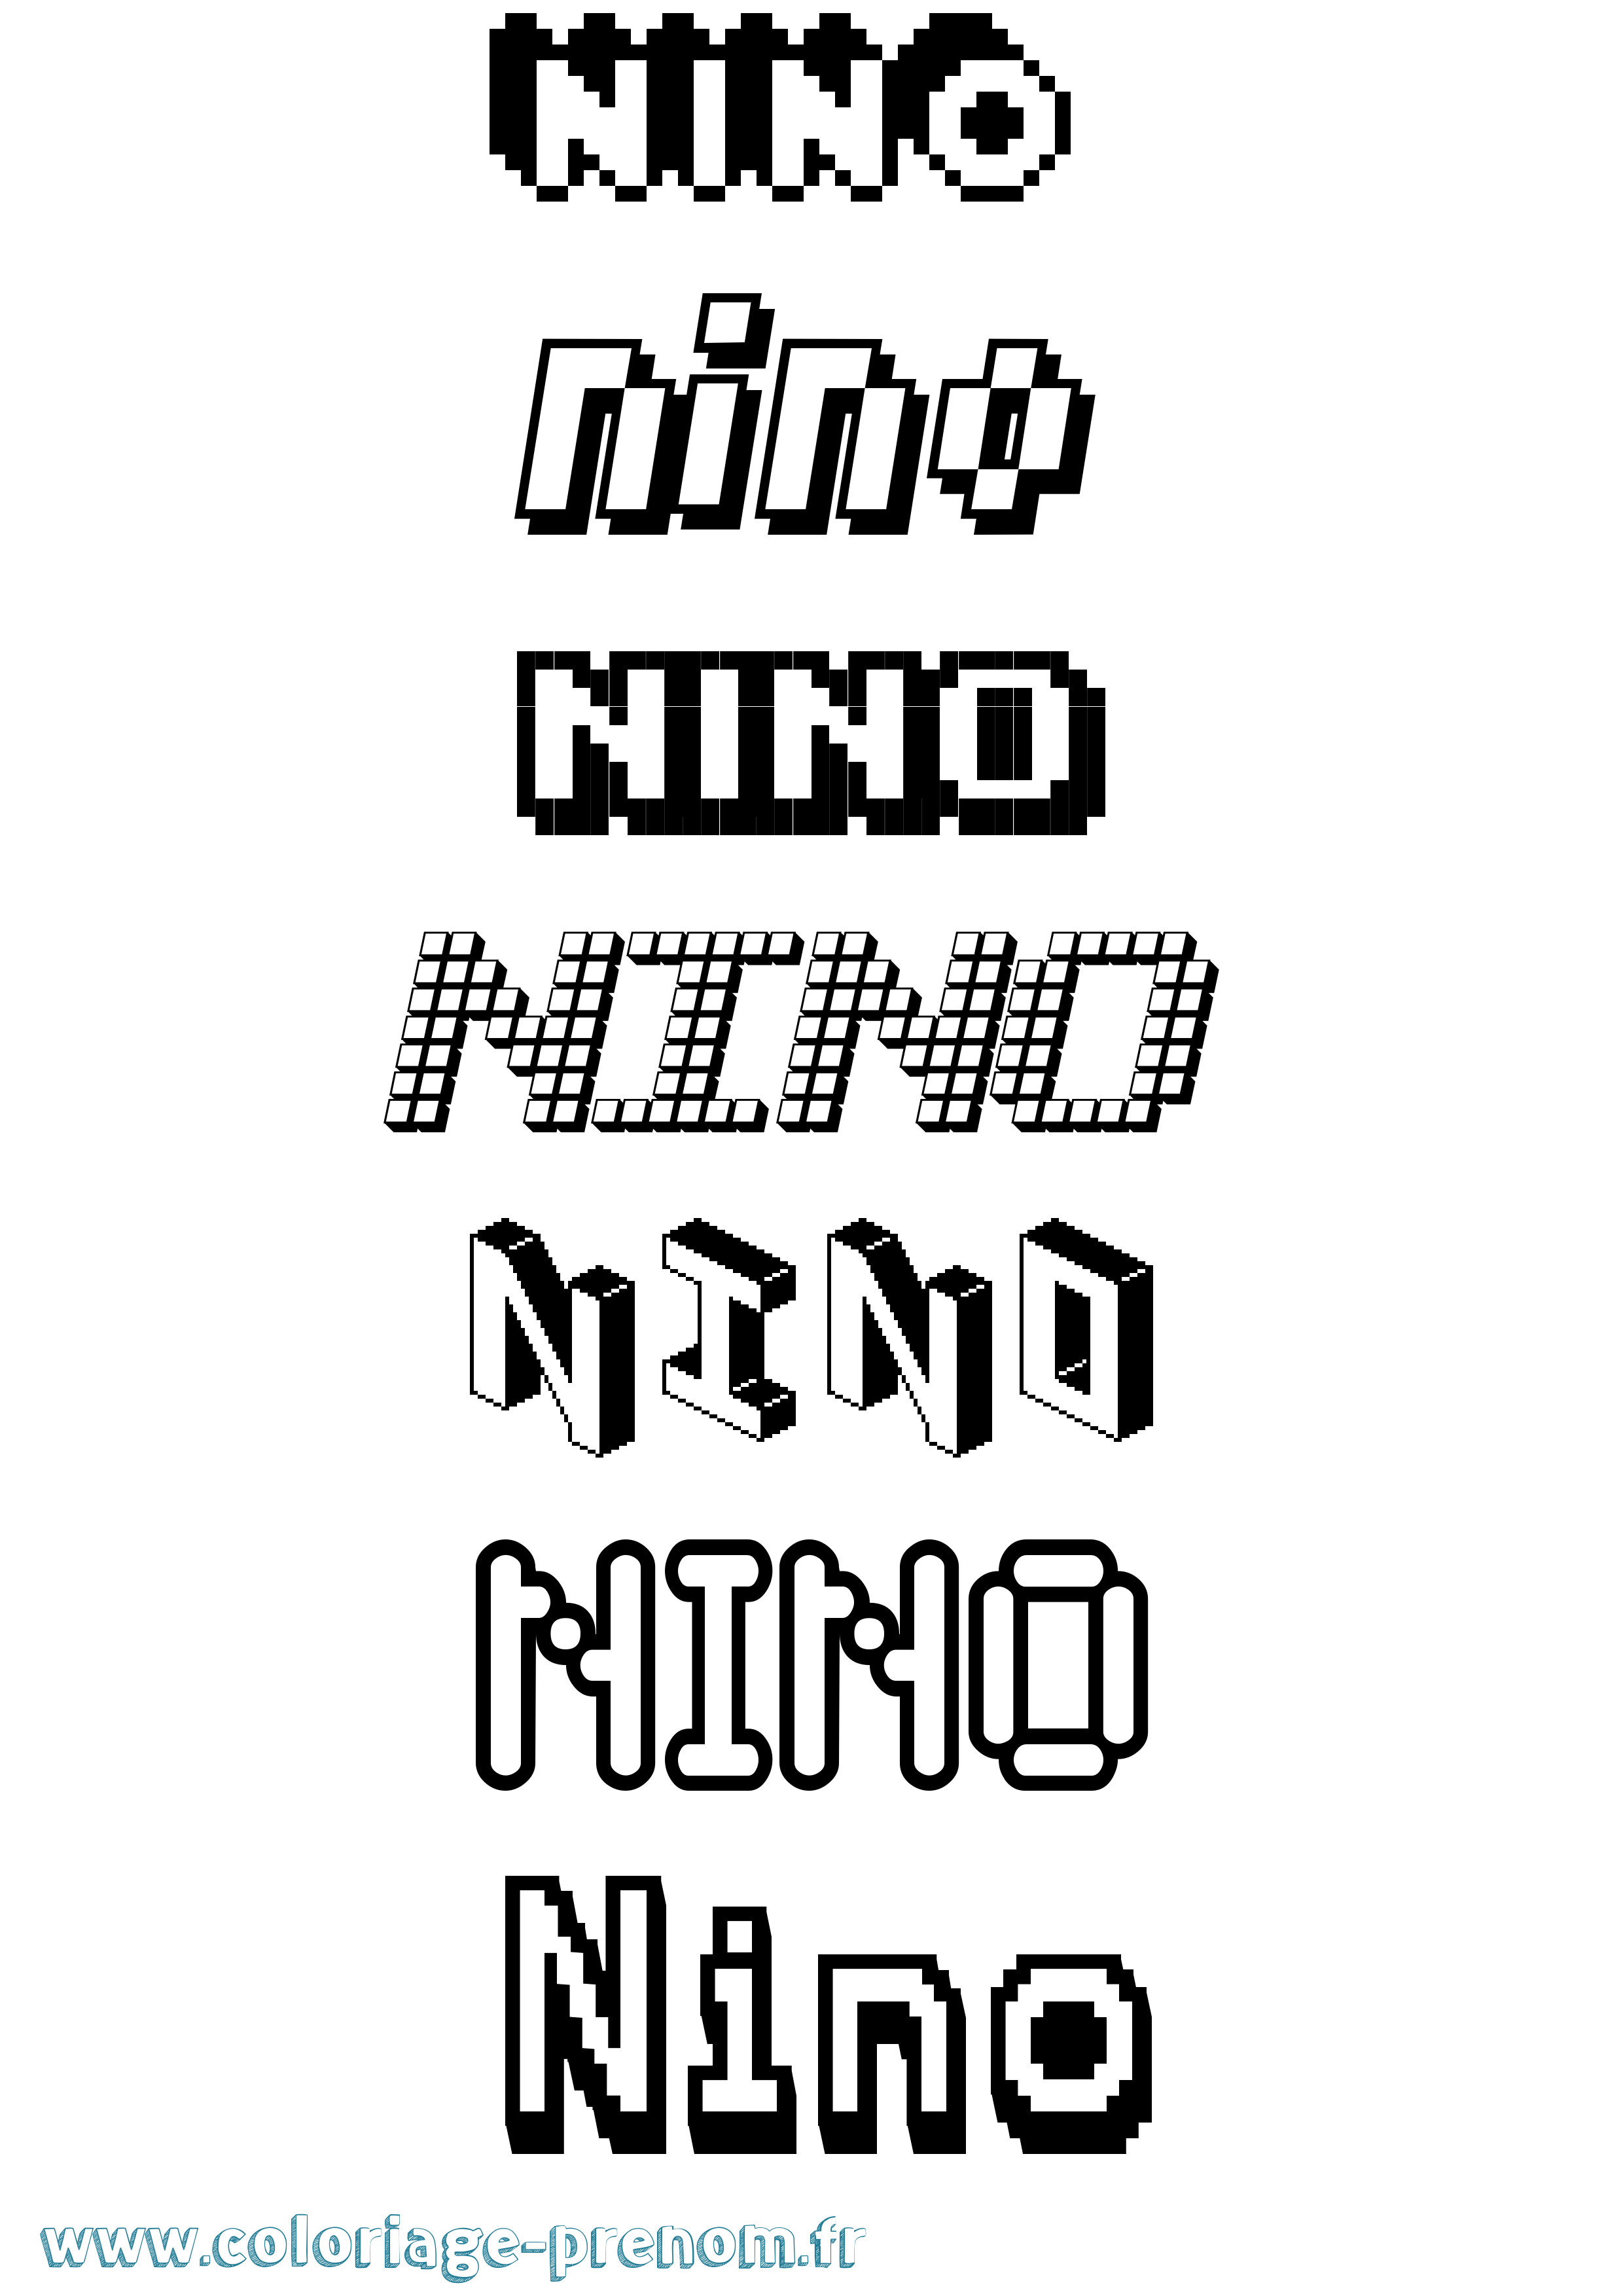 Coloriage prénom Nino Pixel